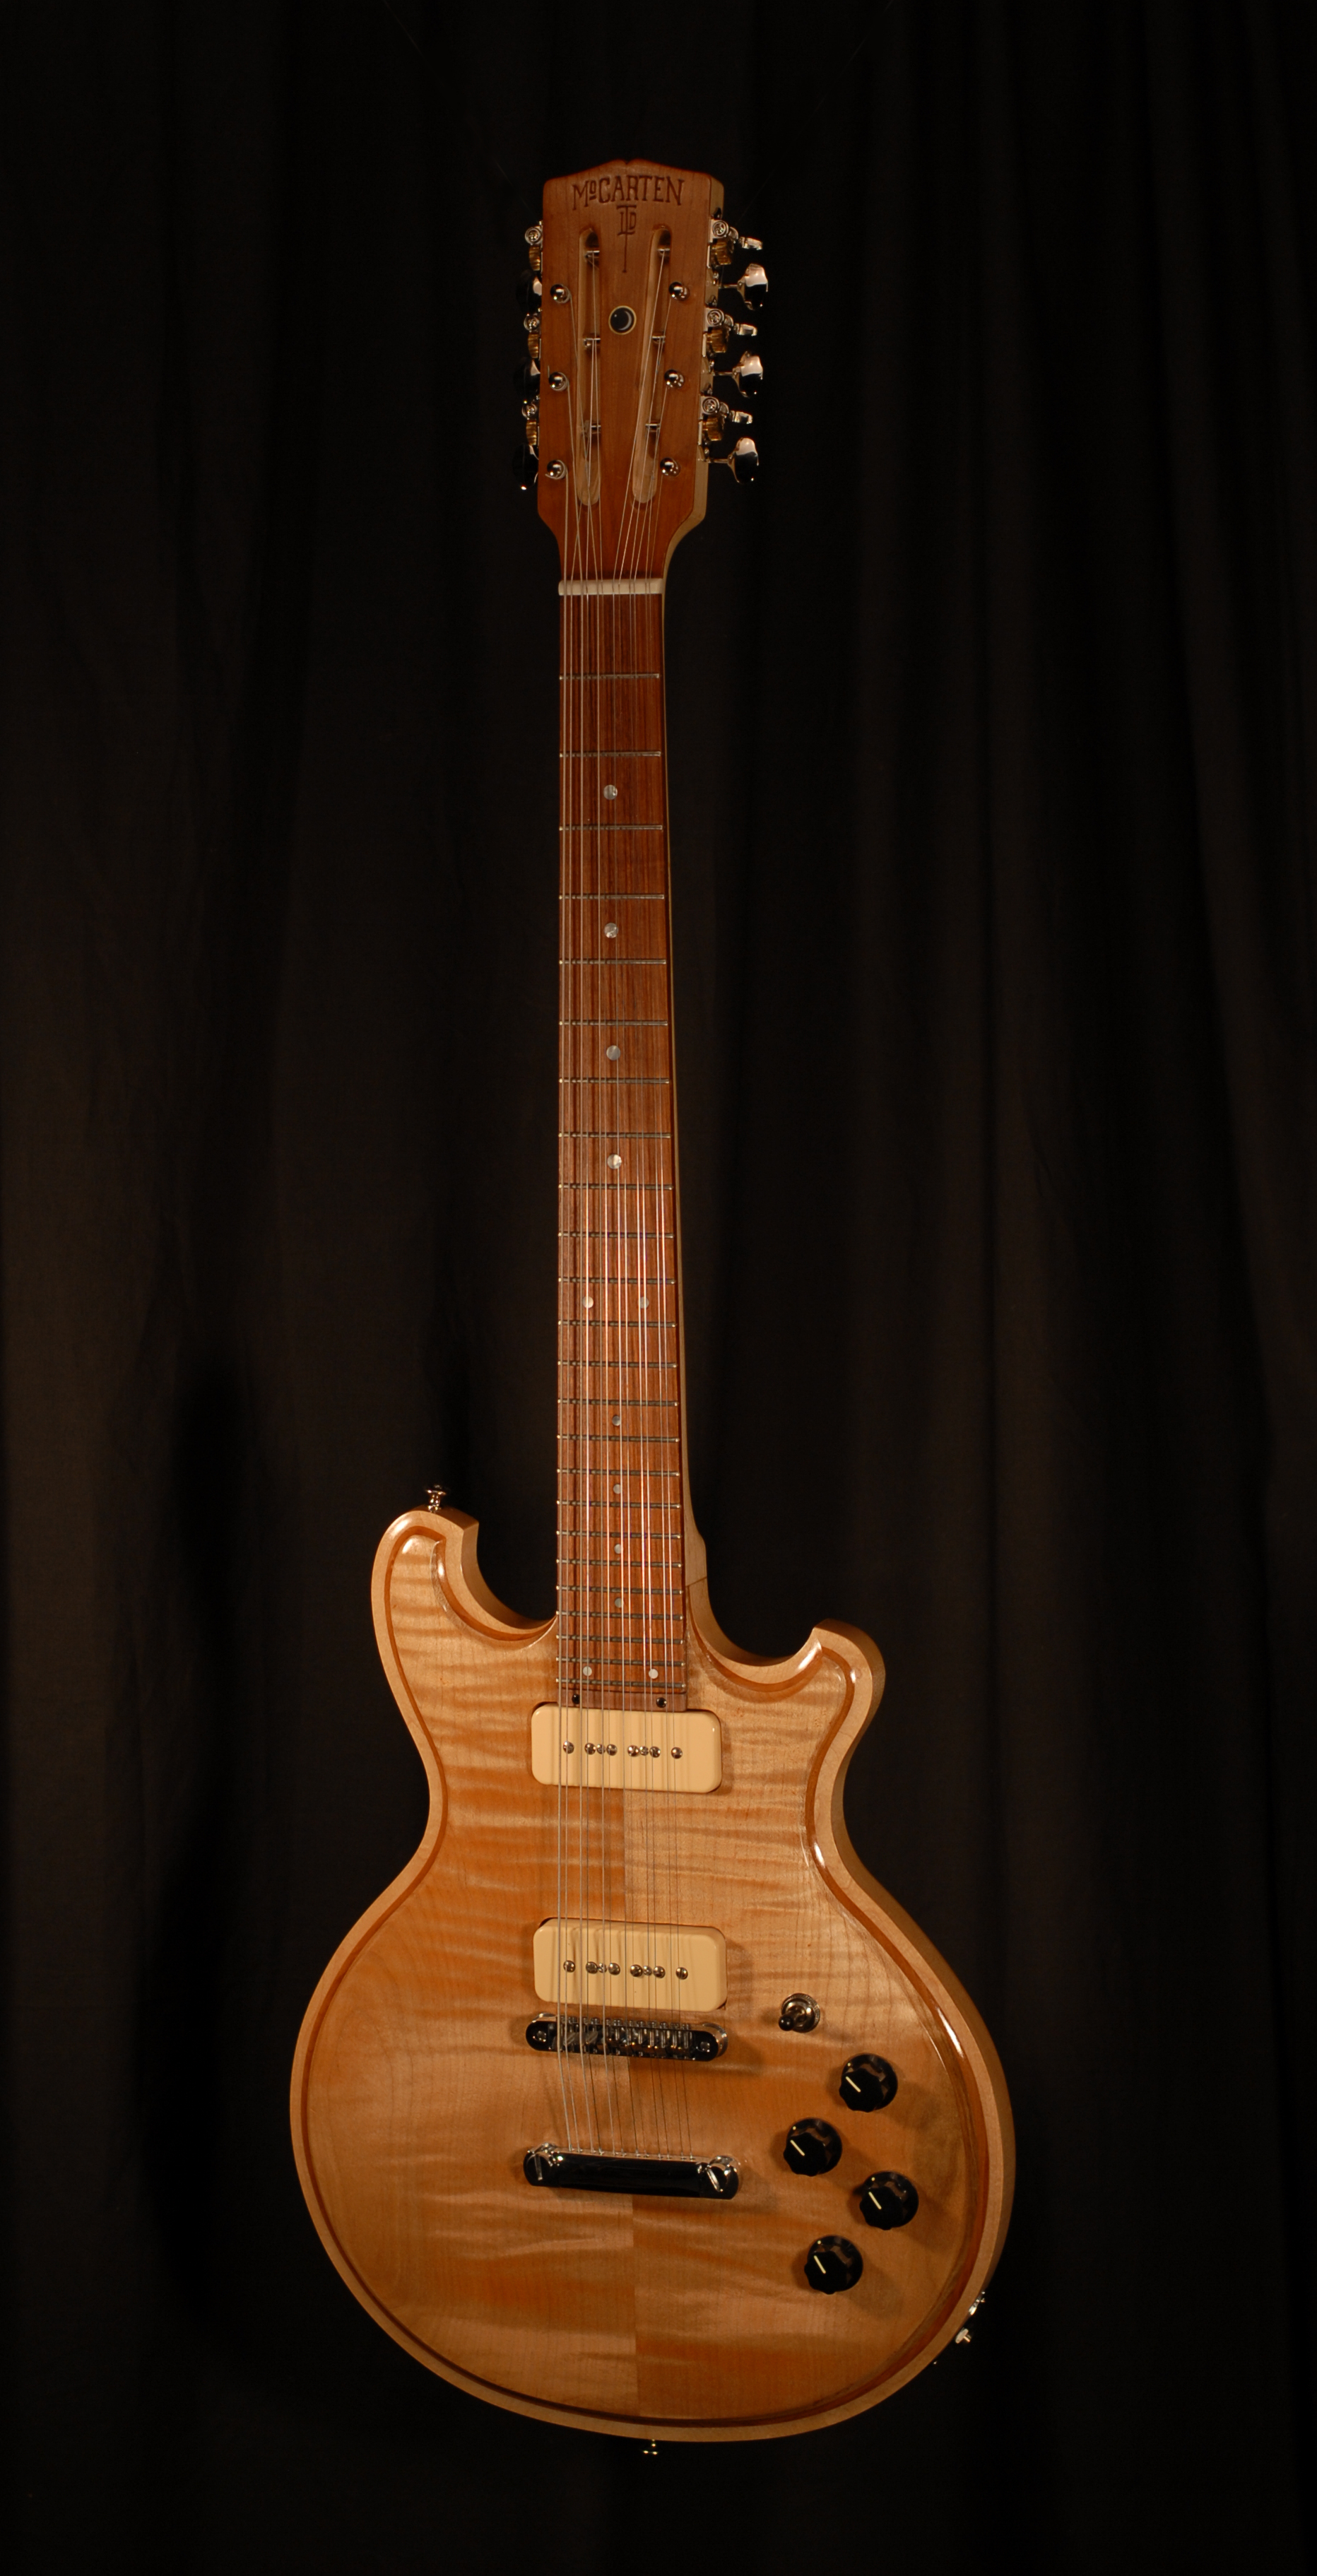 front view of michael mccarten's double cutaway electric electric 12 string guitar modelguitar model